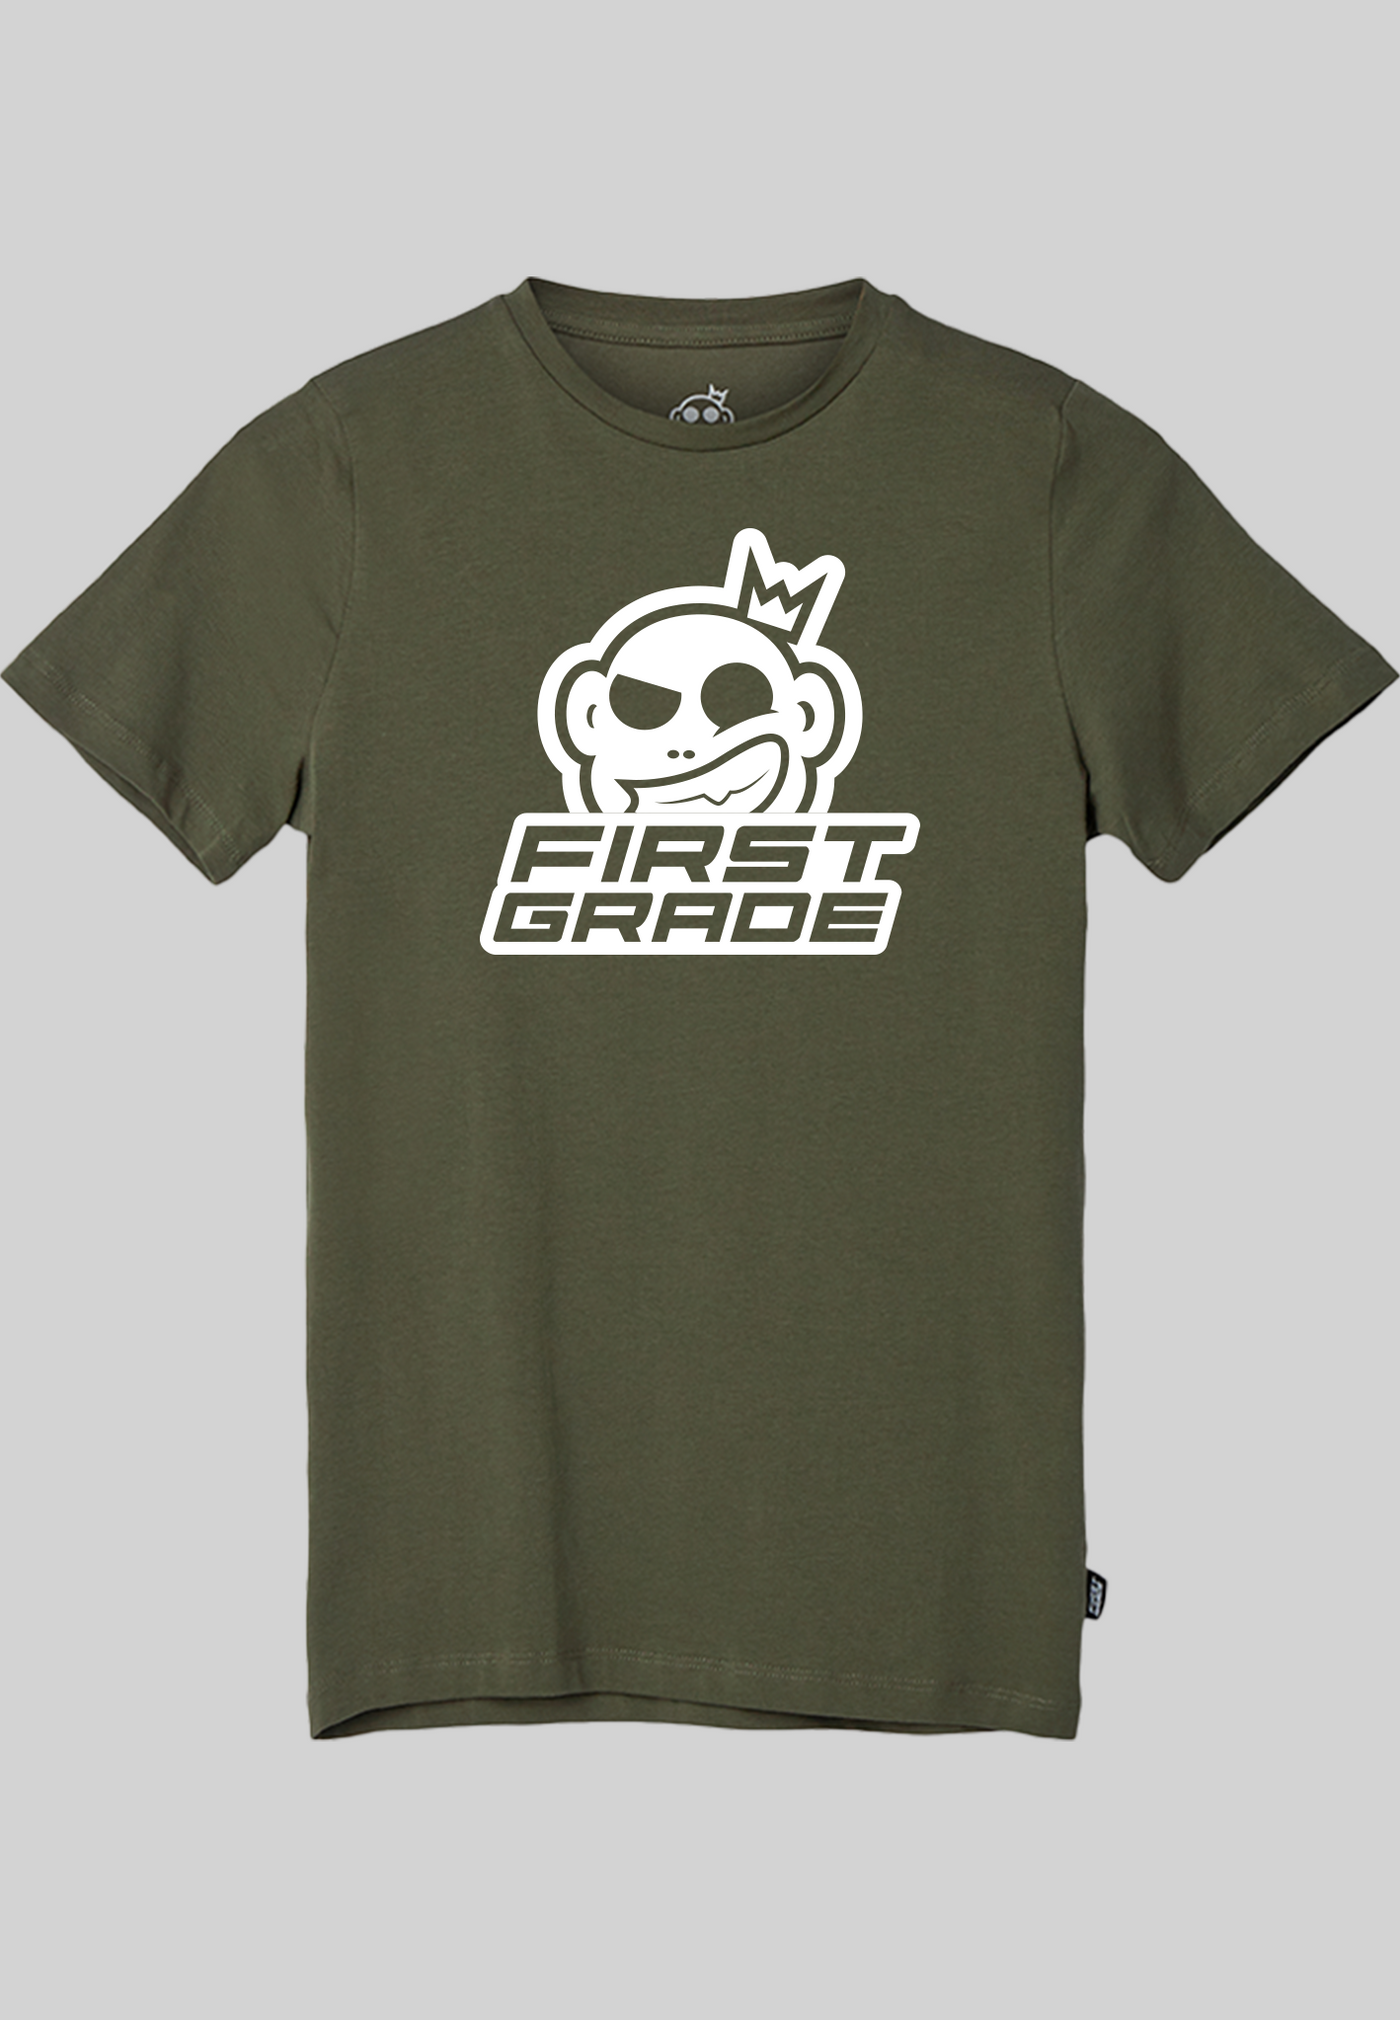 FirstGrade - CLUB - Army t-shirt